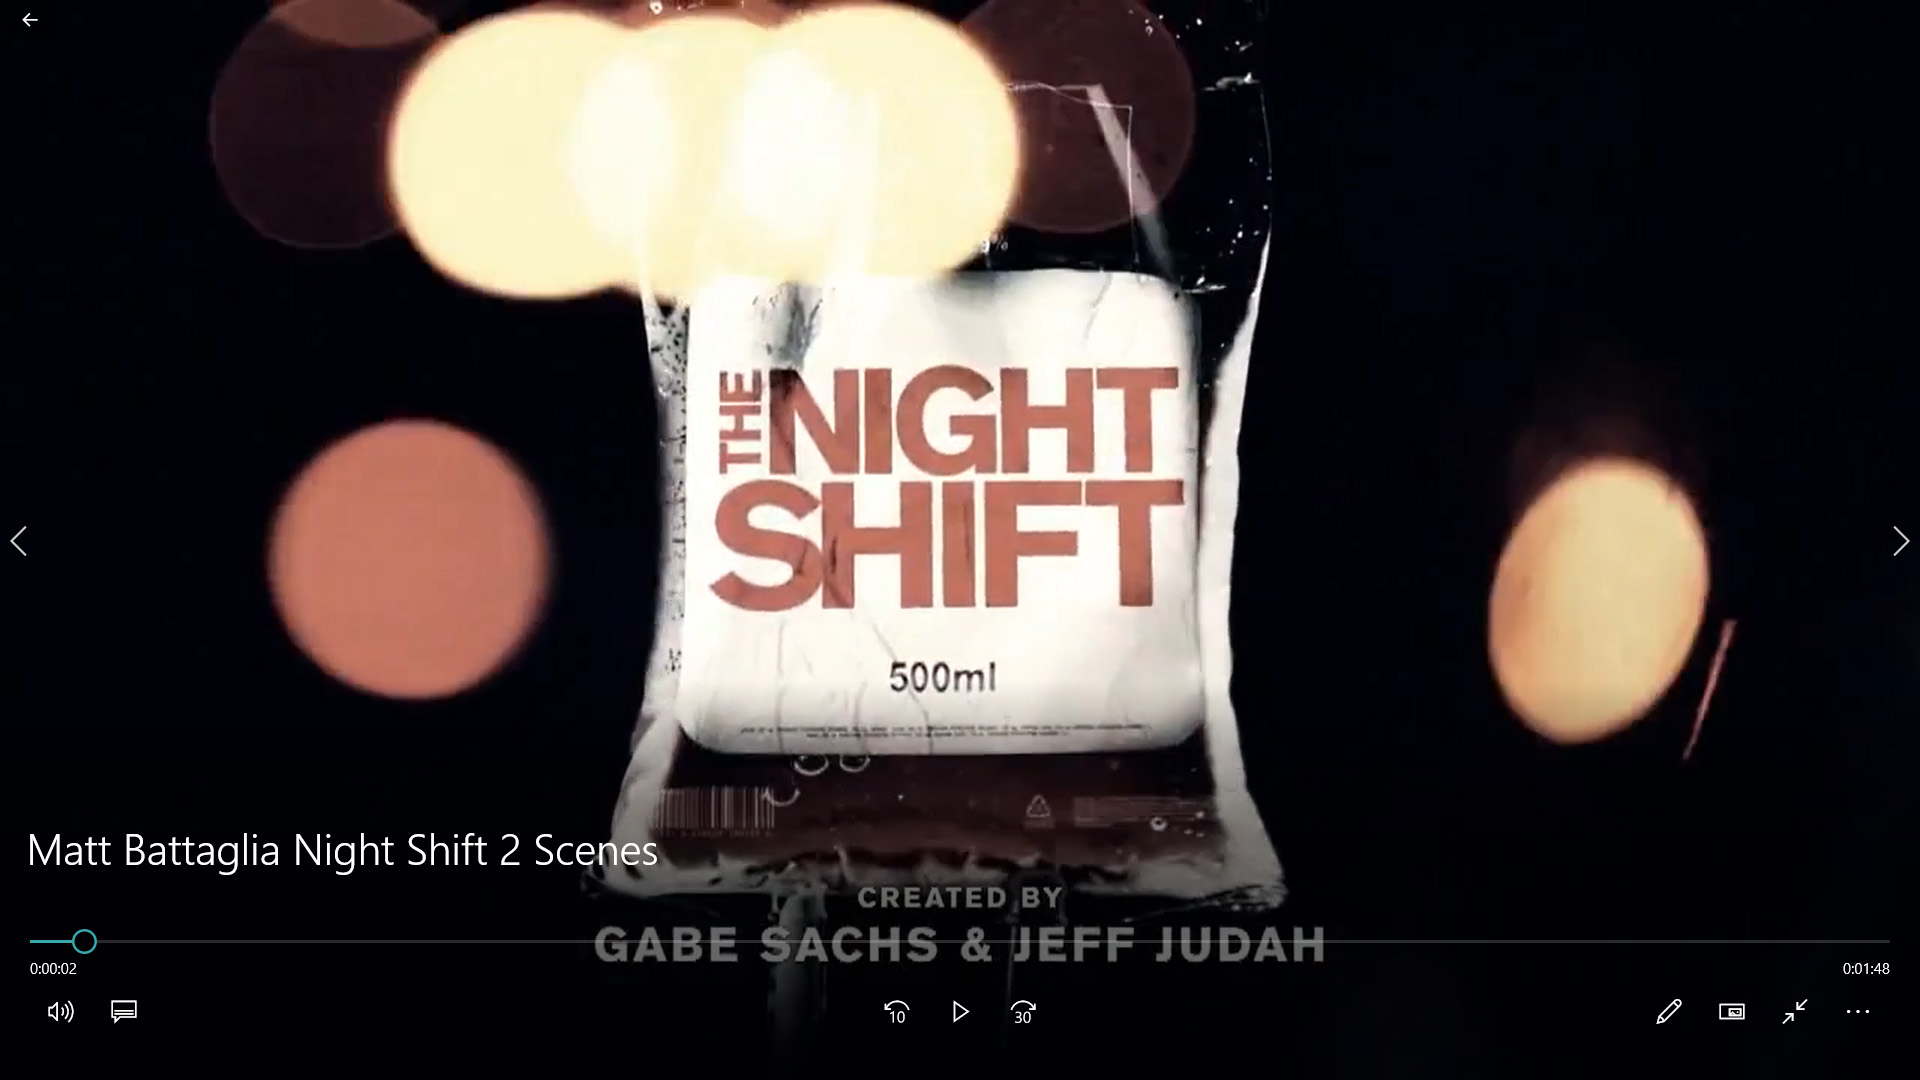 The Night Shift 2